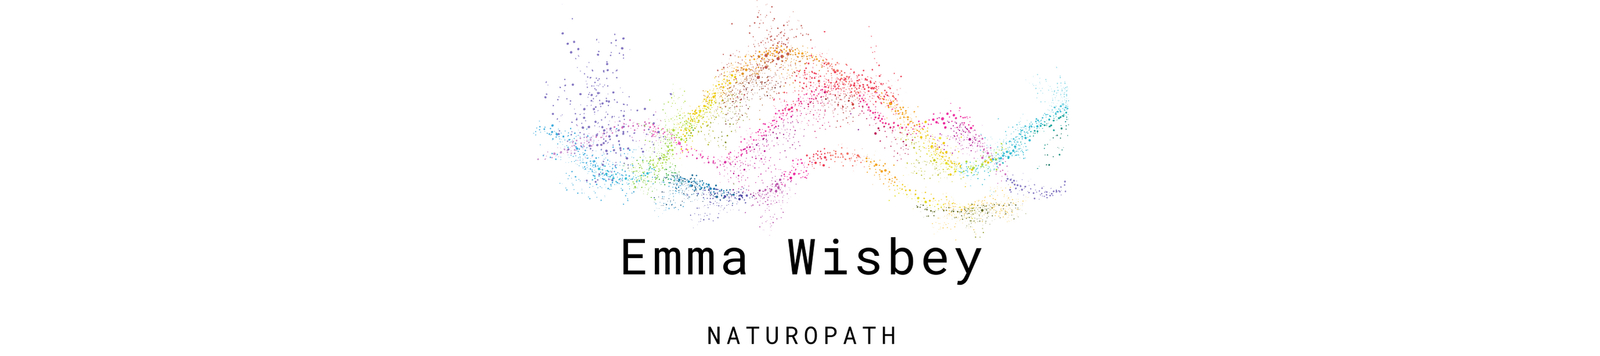 Emma Wisbey Naturopath